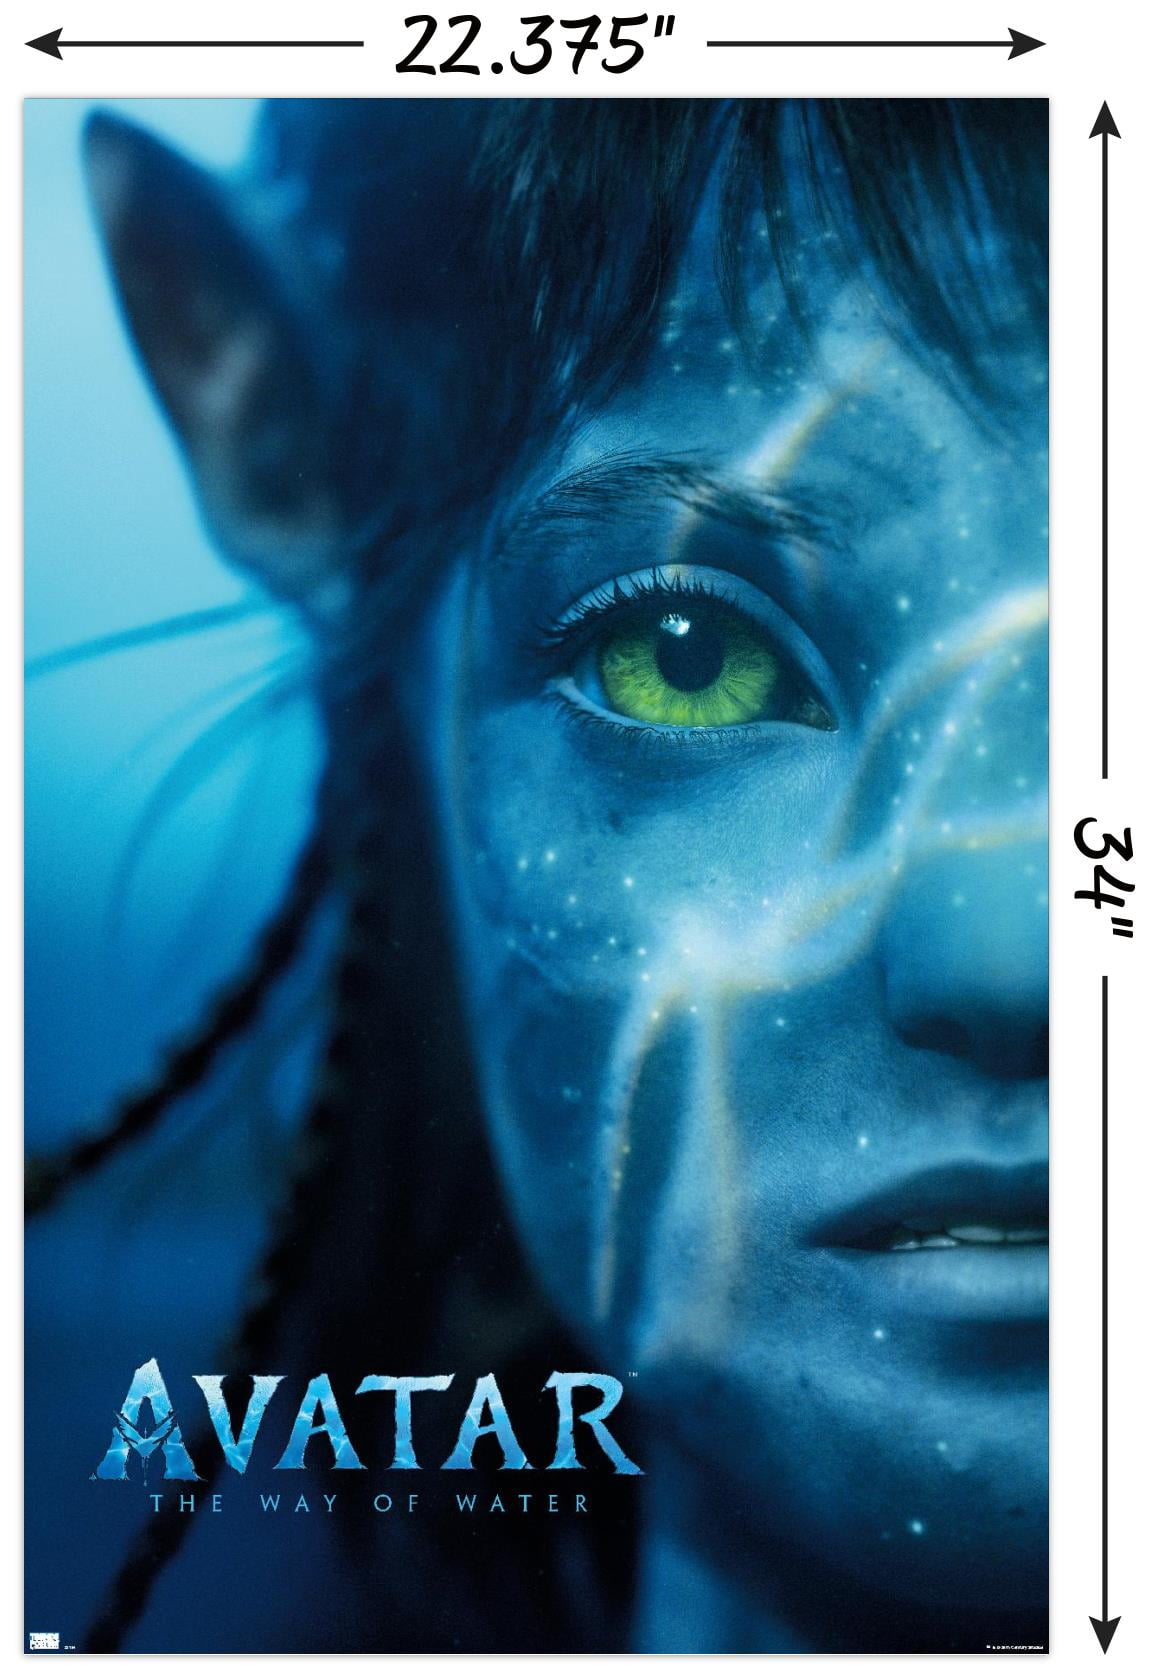 ArtStation  Avatar  The Way of Water poster Illustration